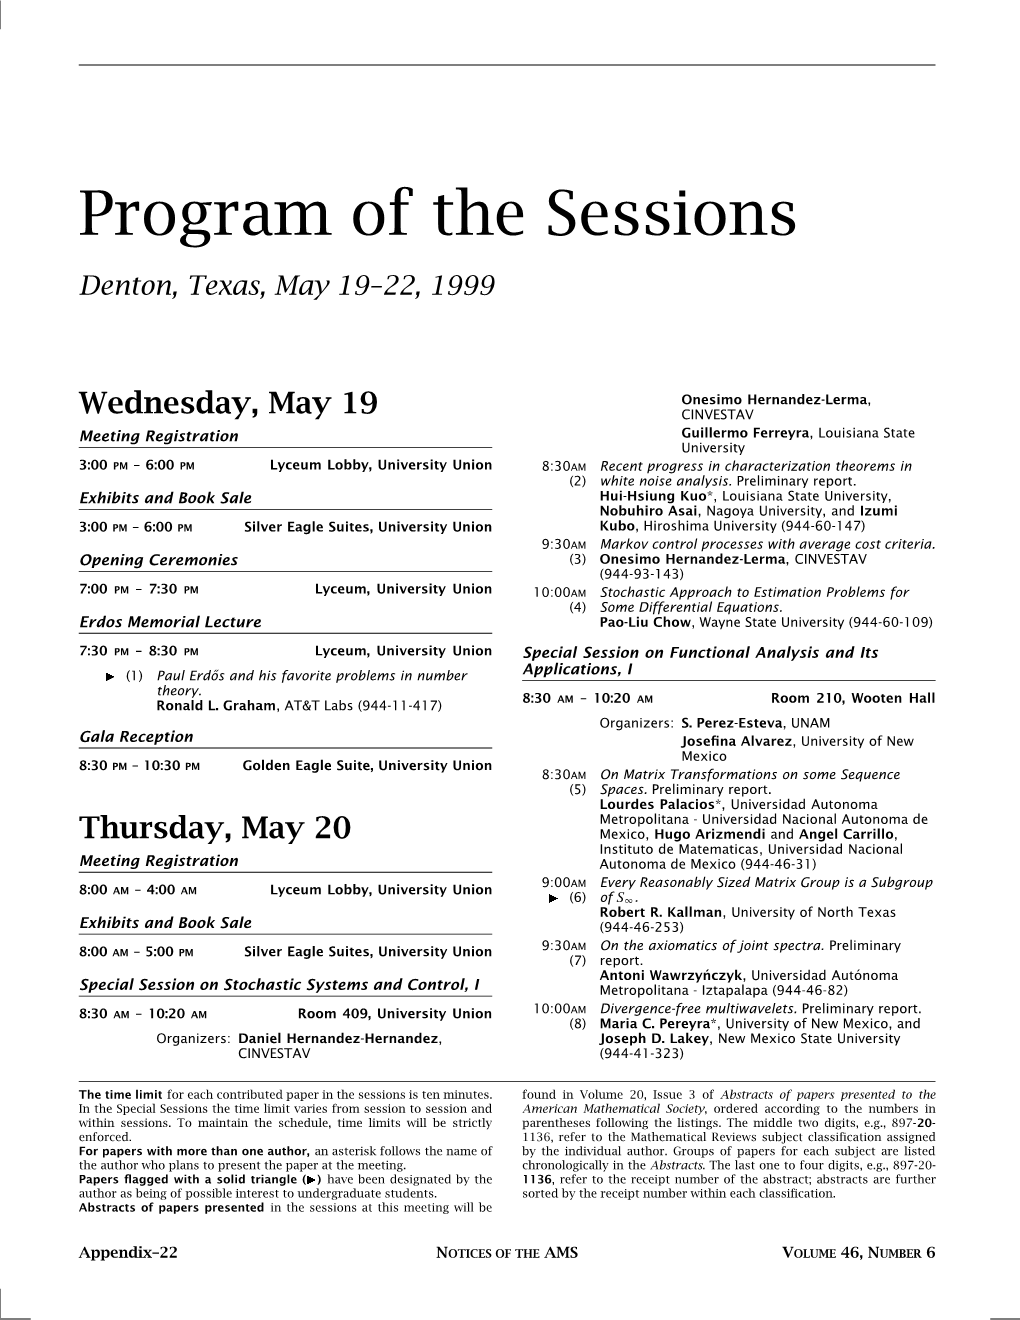 Program of the Sessions, Denton